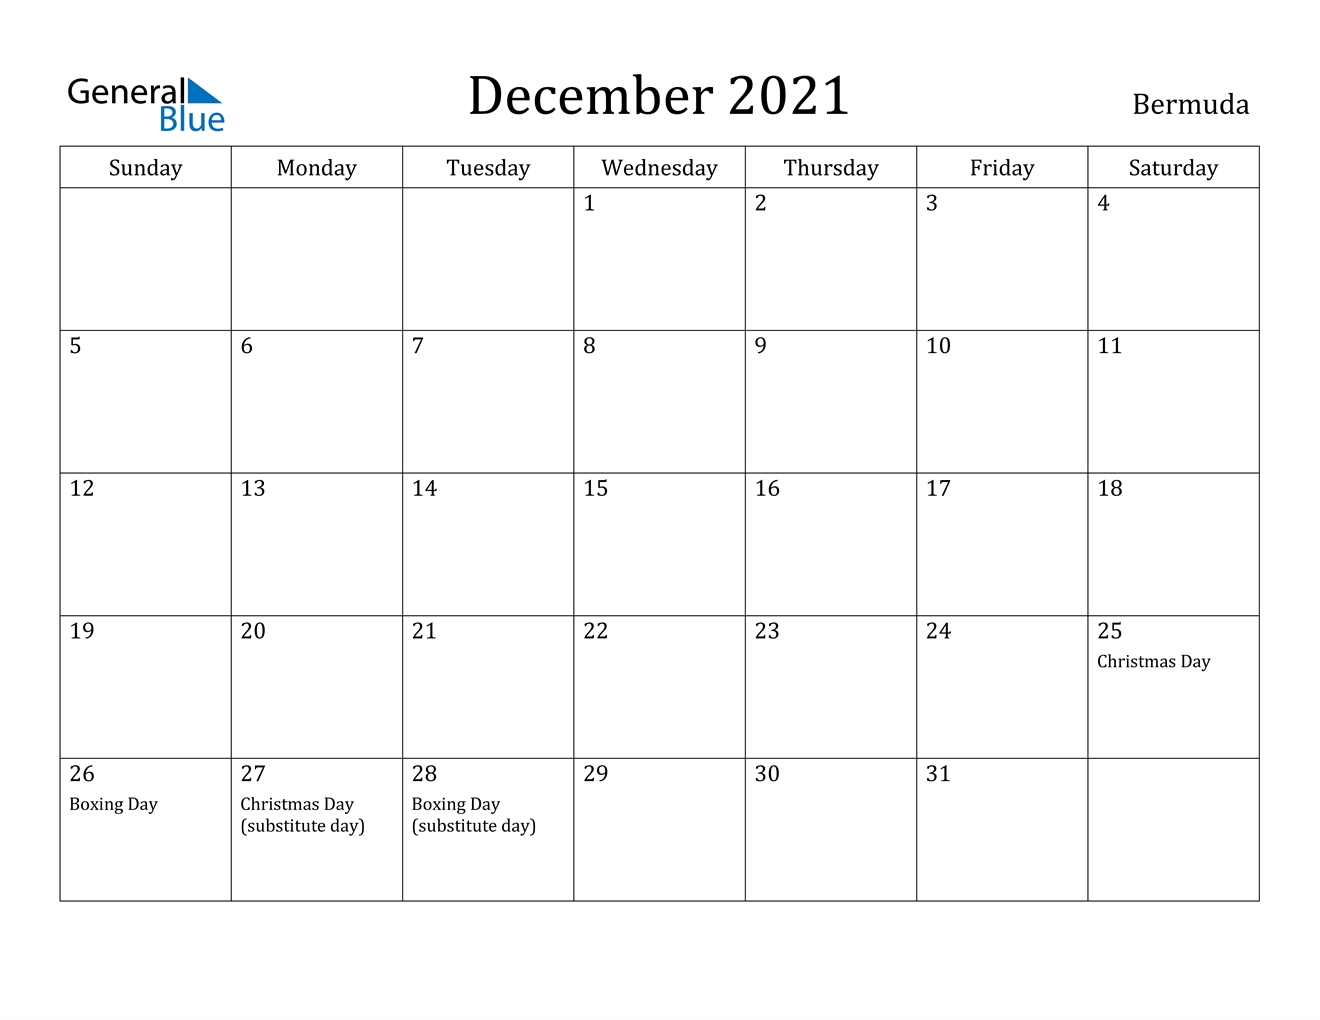 December 2021 Calendar - Bermuda July 2020 - December 2021 Calendar